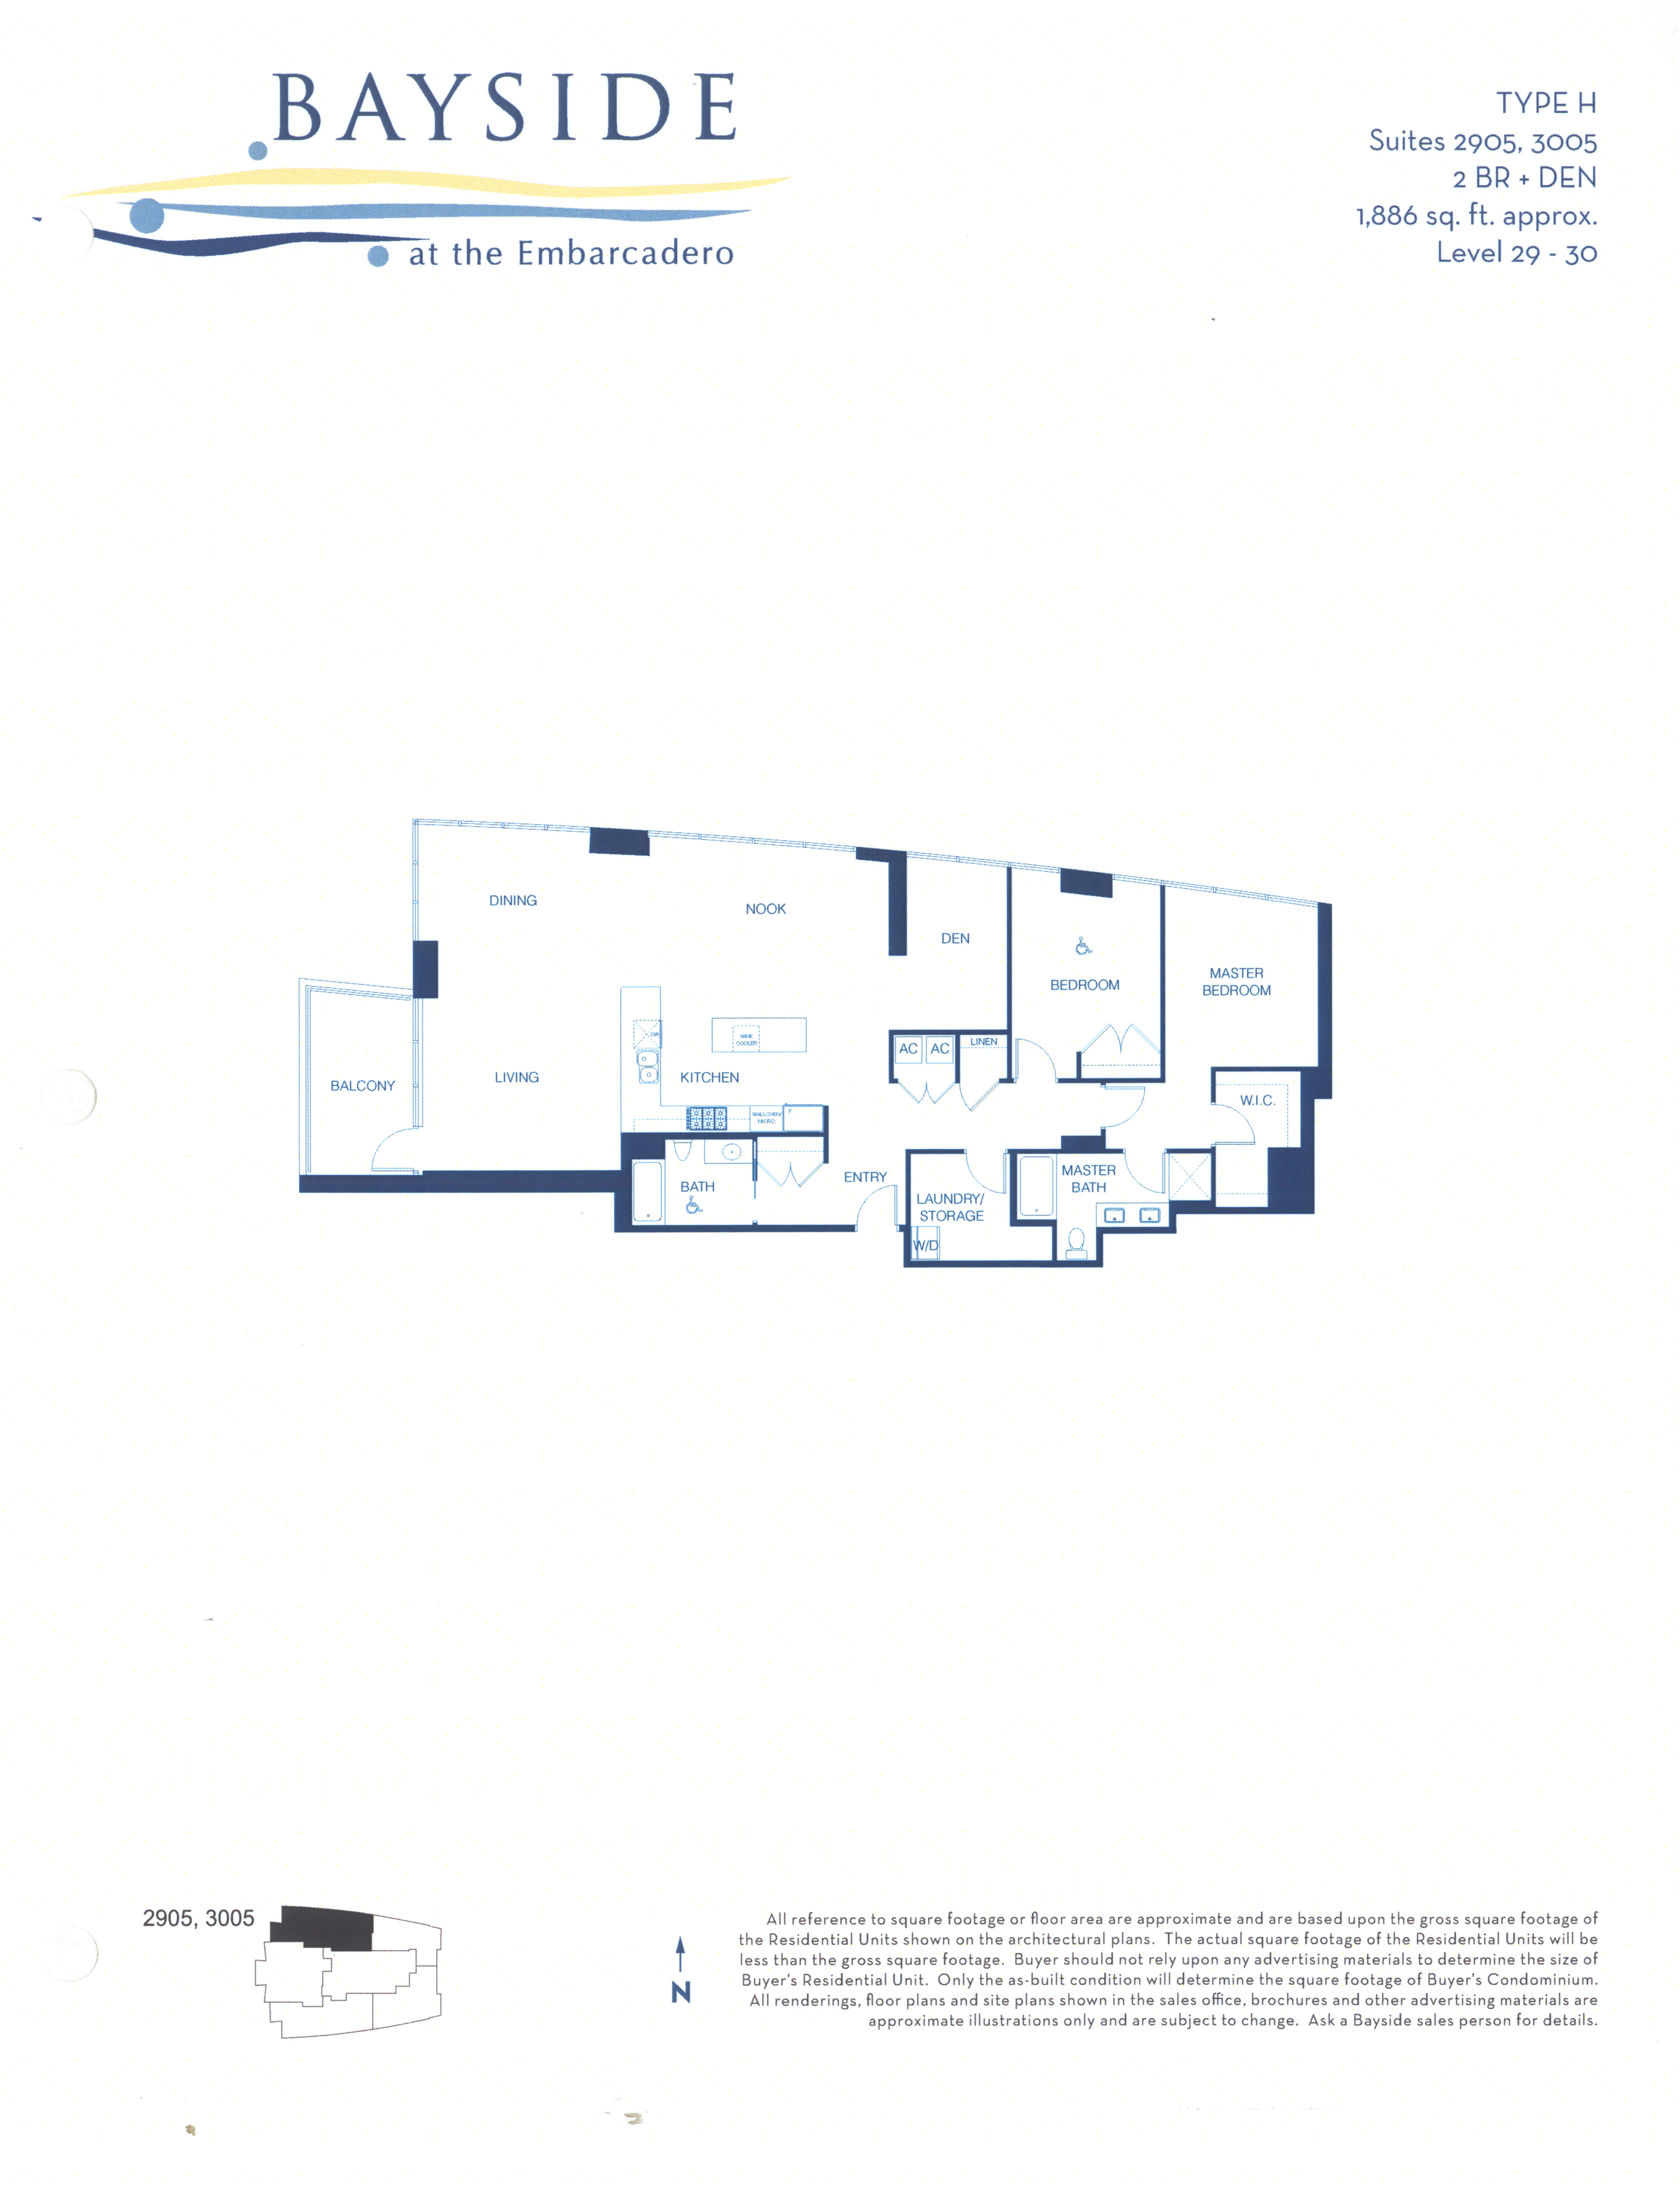 Bayside Floor Plan Level 29- 30 Type H